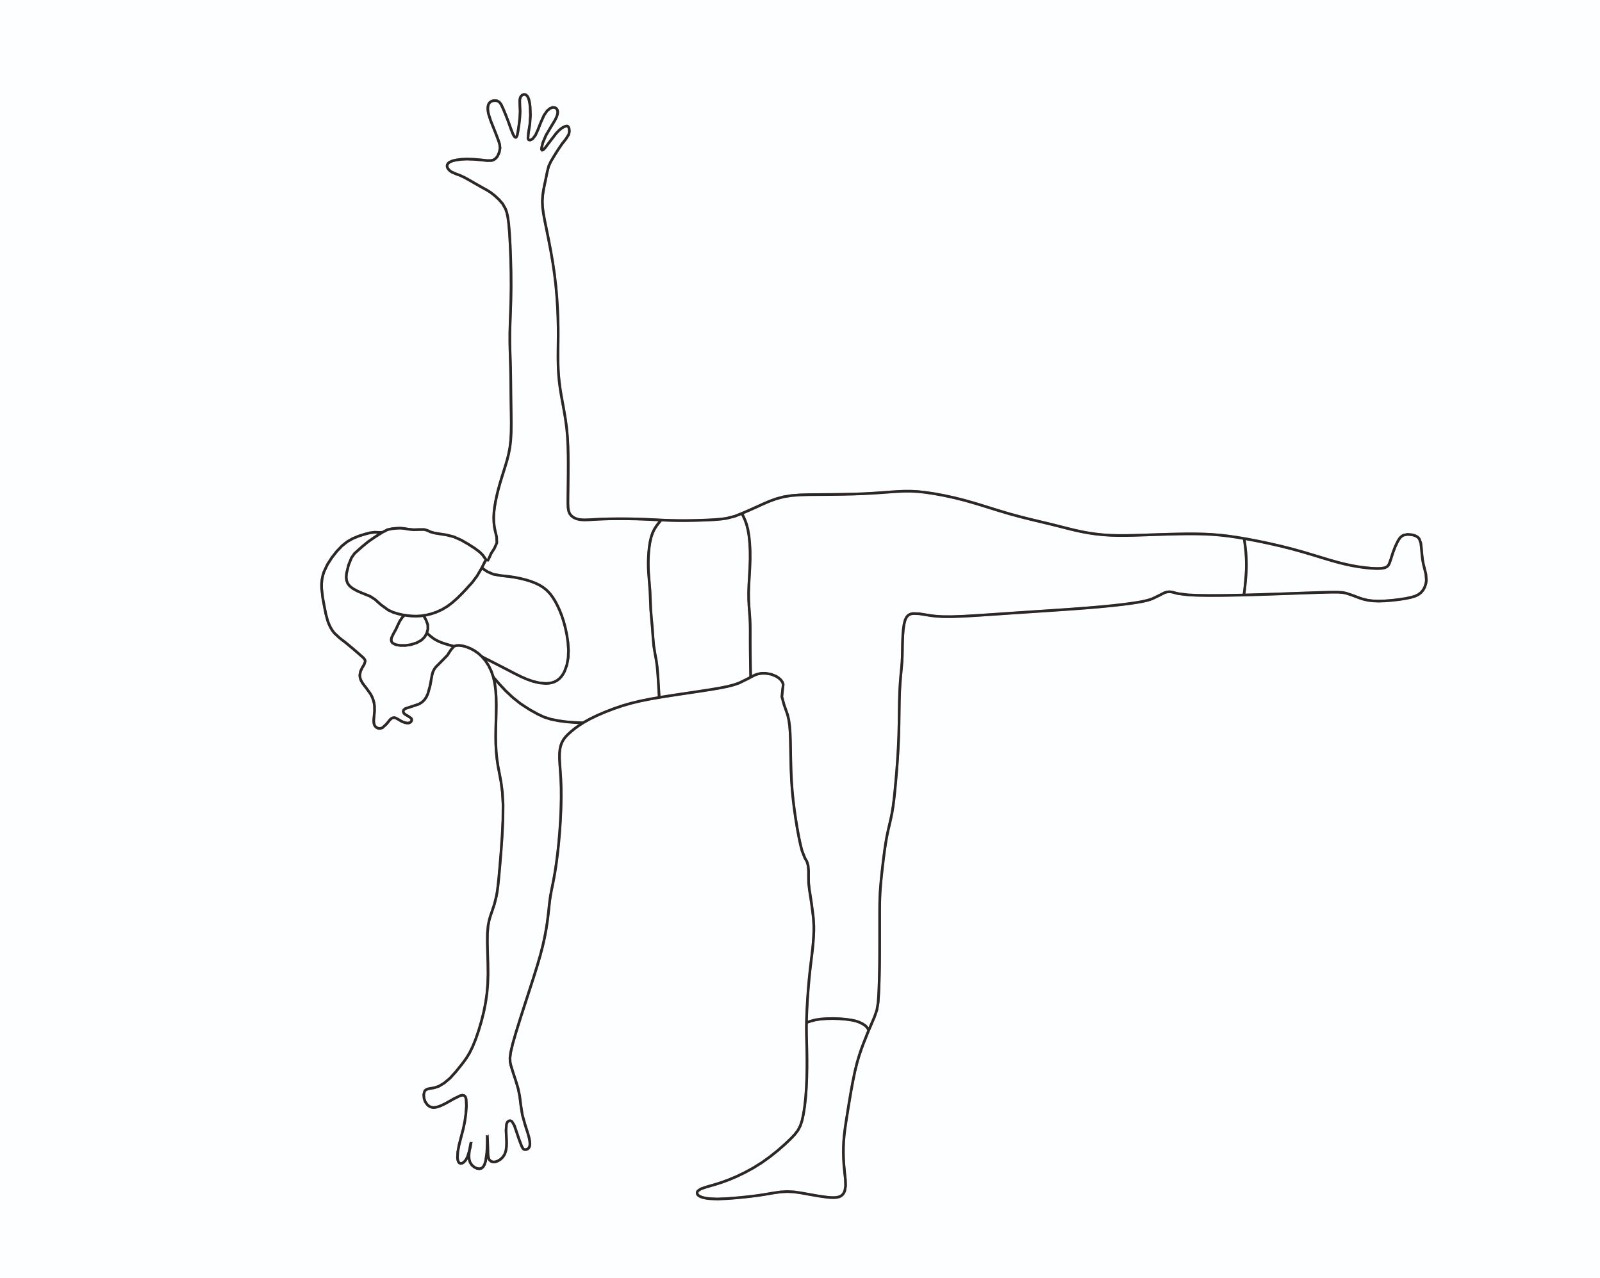 Revolved Triangle Pose: How to Practice Parivrtta Trikonasana